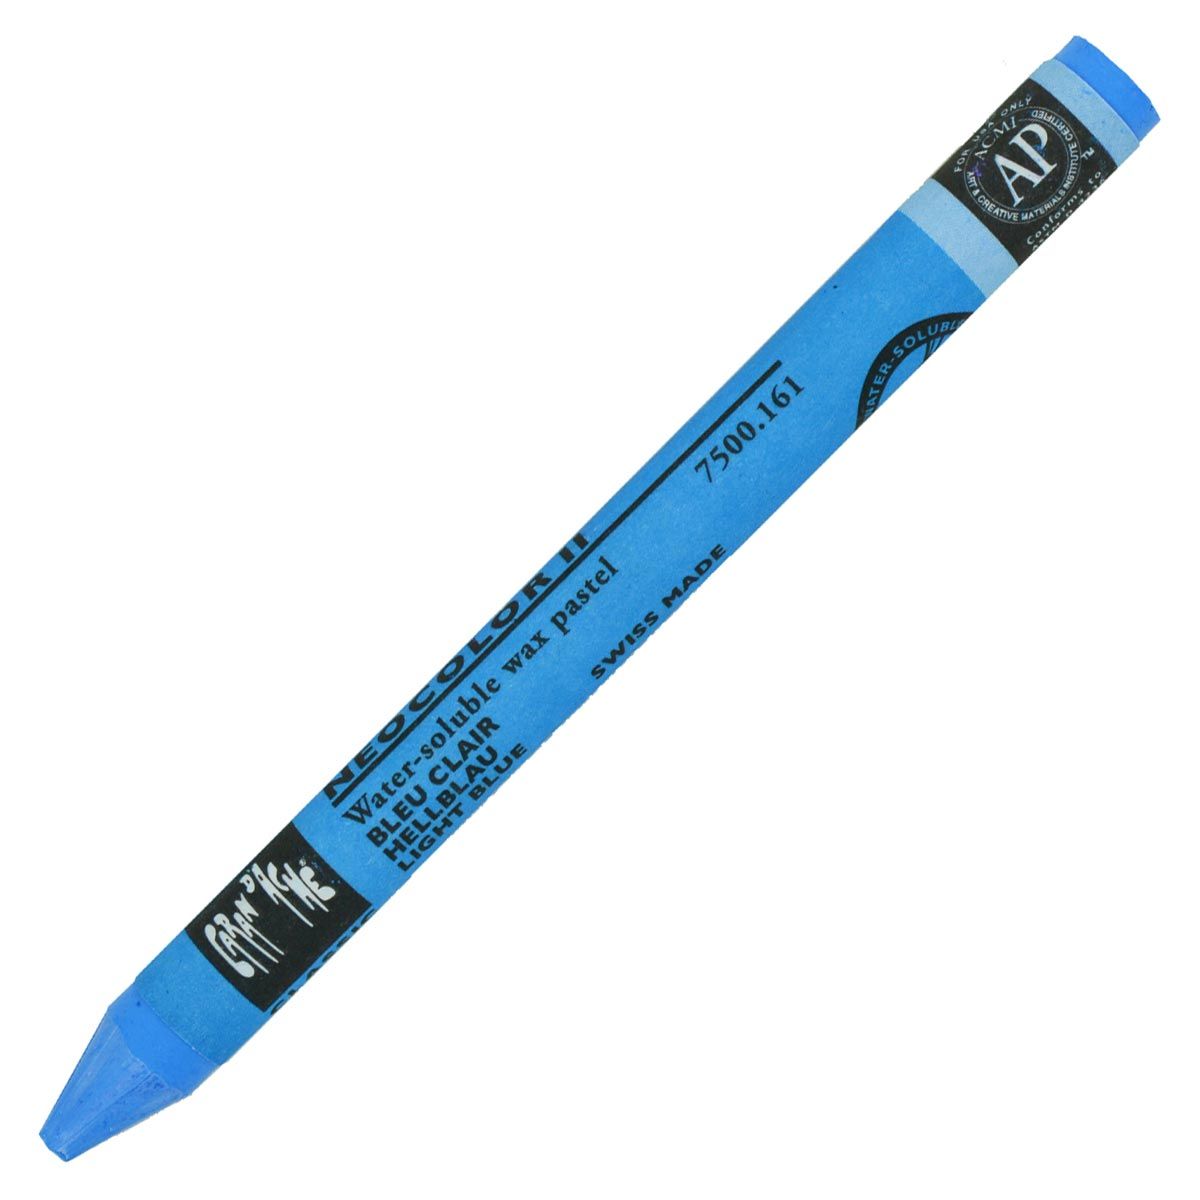 Neocolor II Aquarelle Artists’ Crayon - Light Blue 161